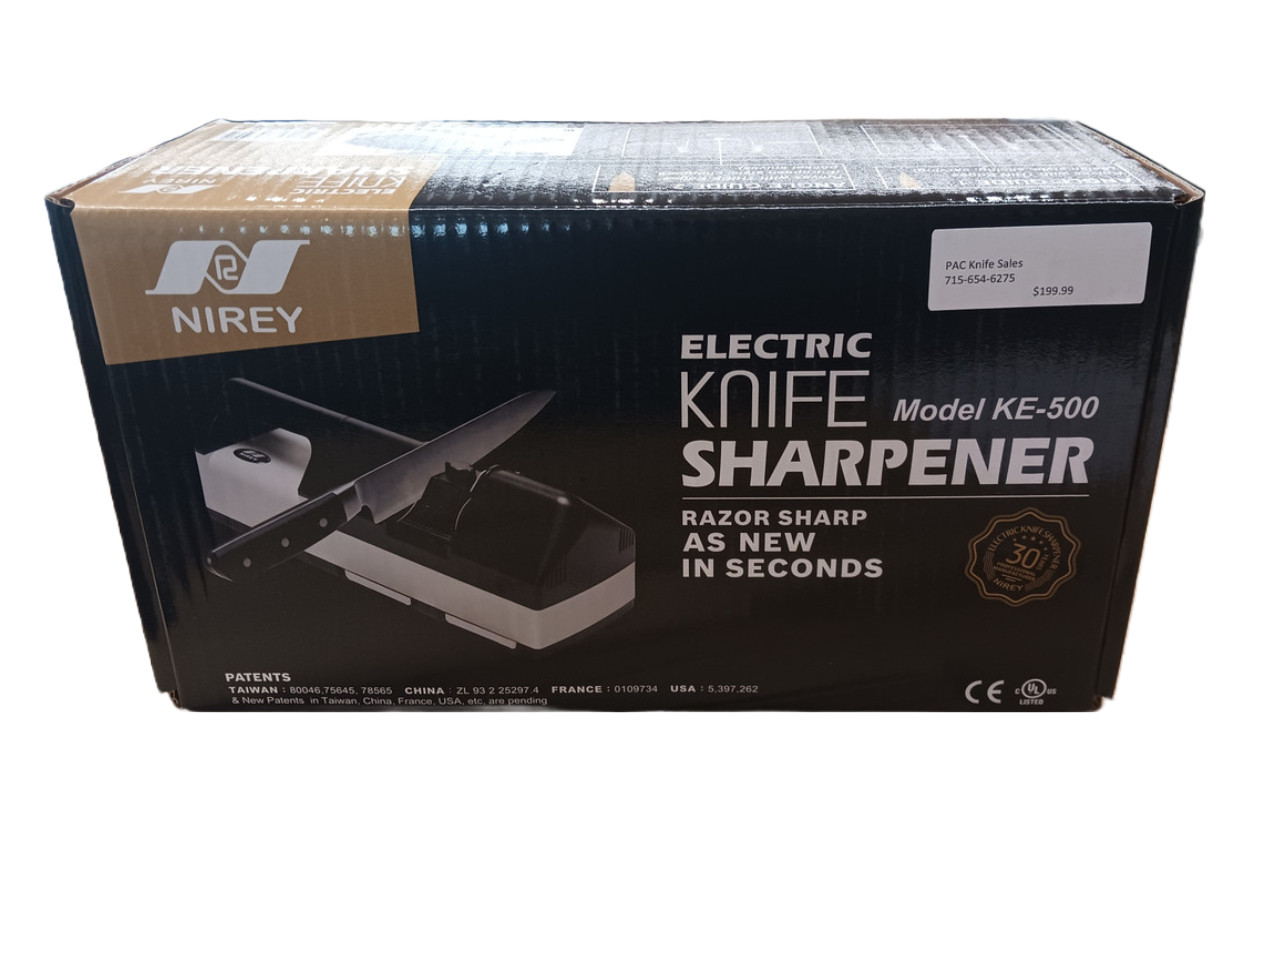 Electric Knife Sharpener - Nirey